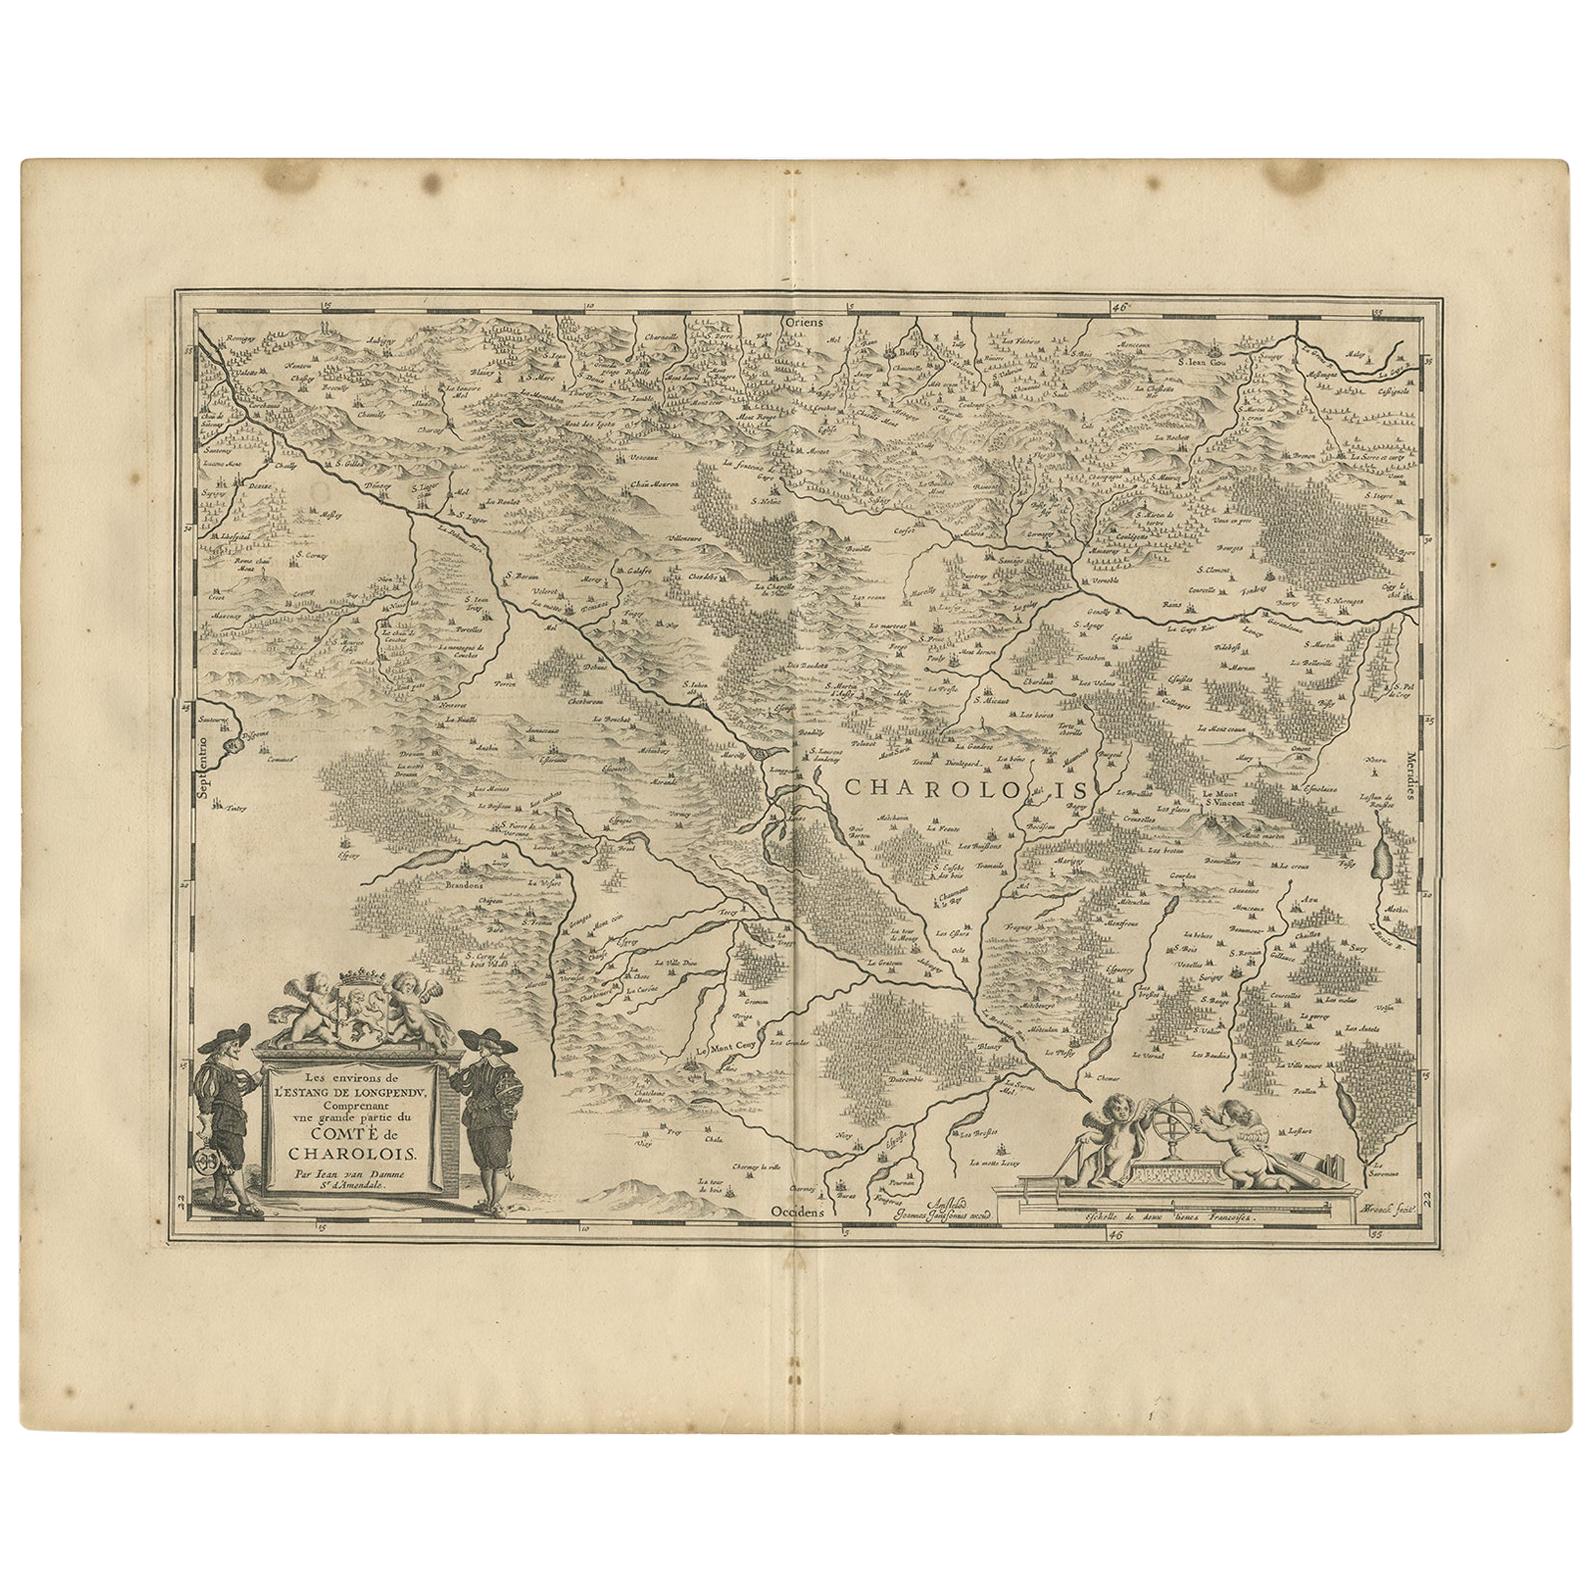 Antique Map of the Region of Charolais by Janssonius, 1657